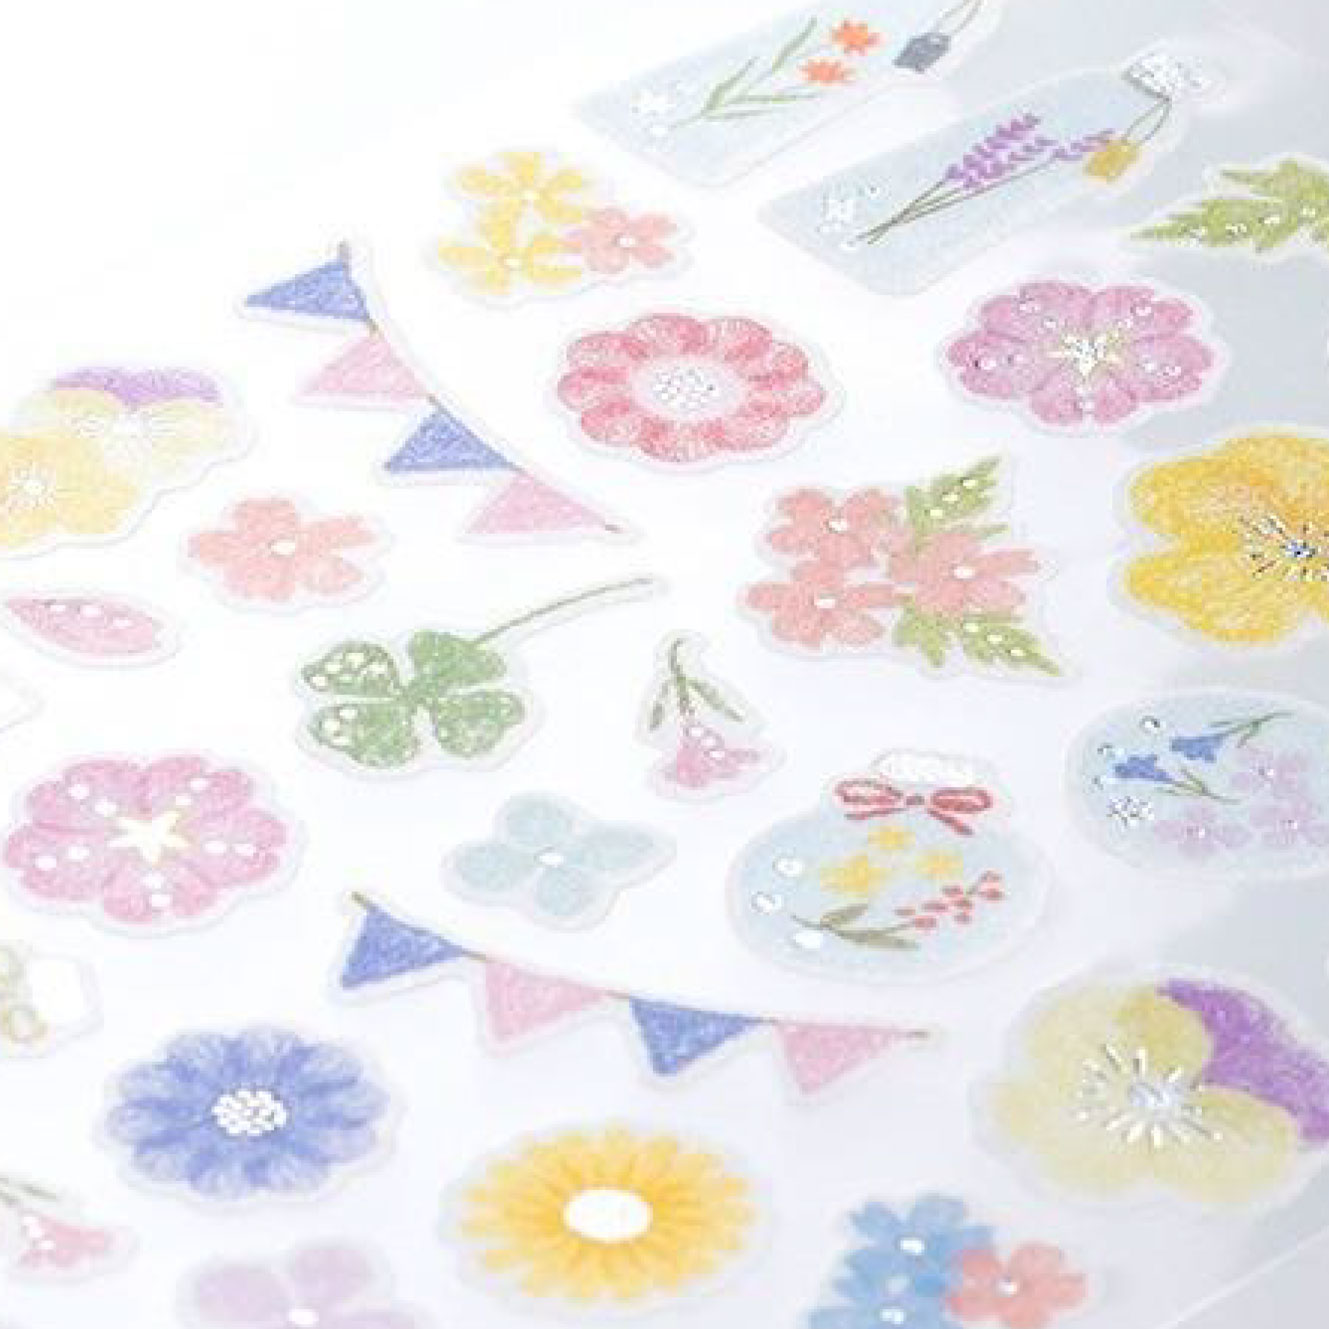 Midori - Sticker Seal - Sticker Marché - Pressed Flower